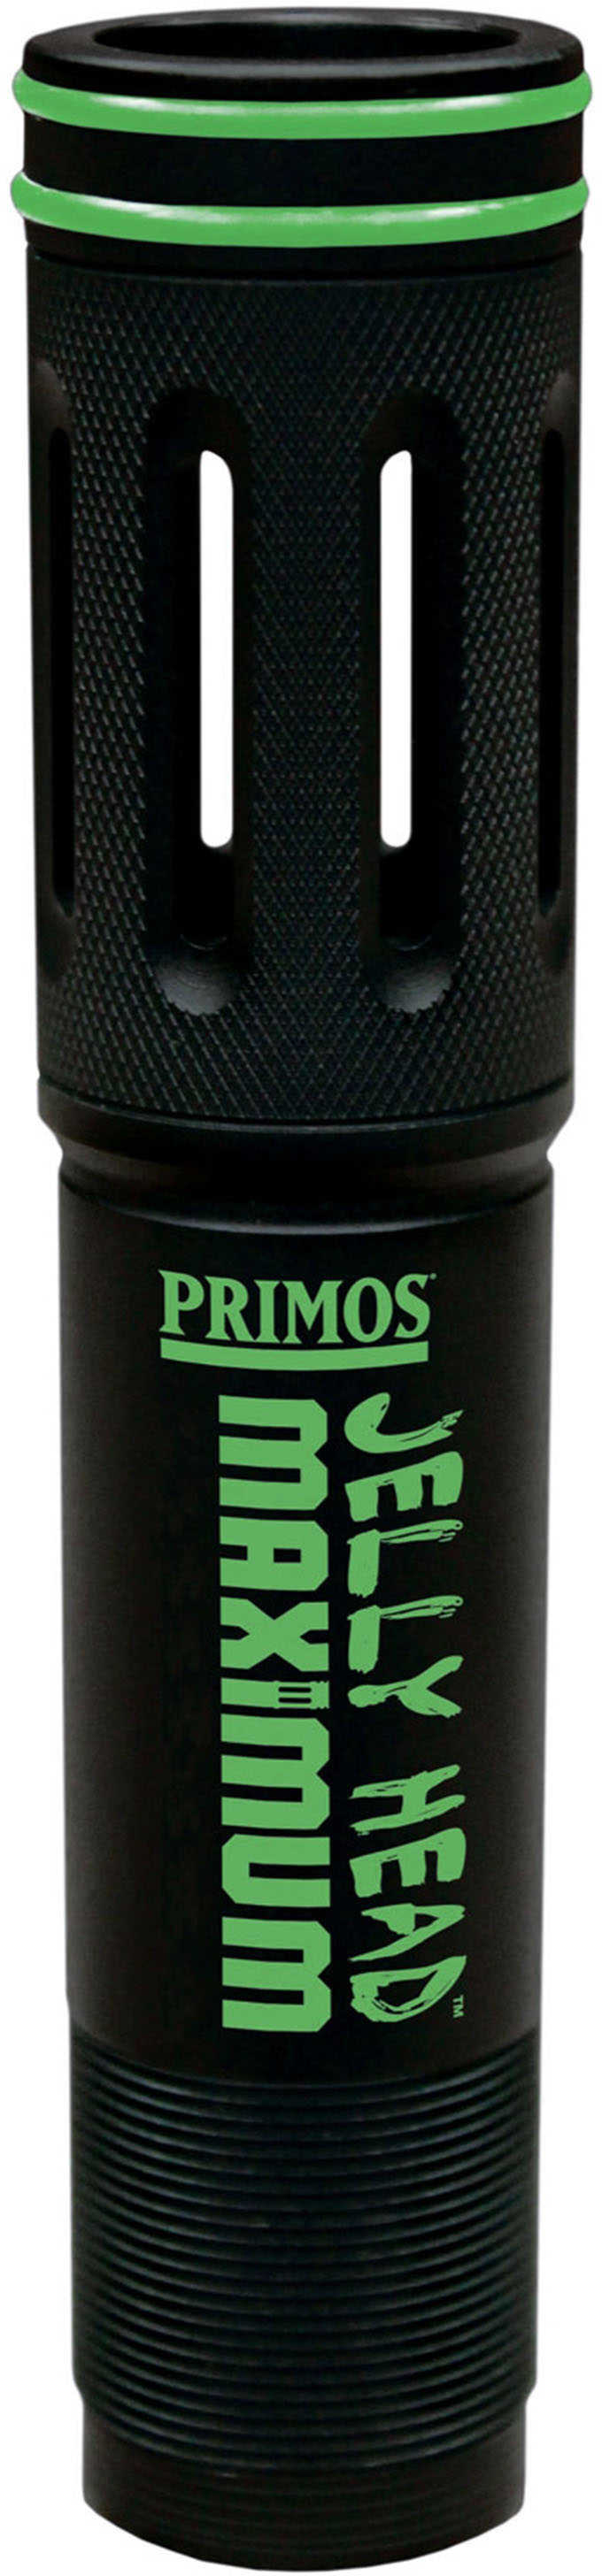 Primos Jelly Head Maximum Choke Tube Fits Beretta Xtrema I & II 12 Gauge XX-Full .690 Constriction Black 69408